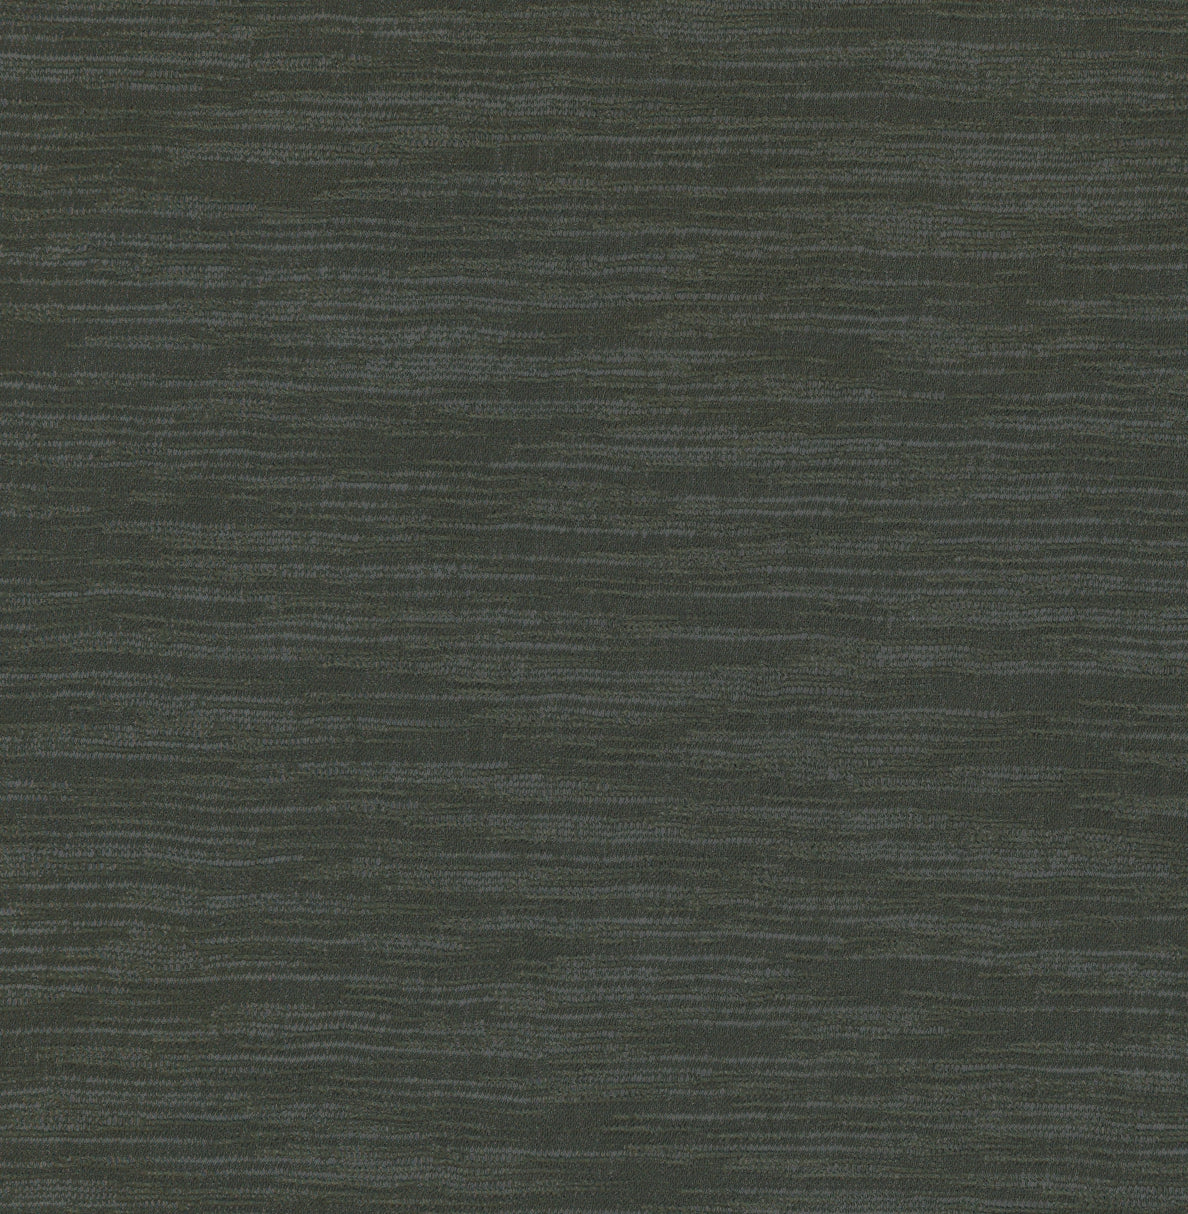 15011-10 Olive Green Polyester Plain Dyed 100% 58" 95g/yd green knit plain dyed polyester Solid Color - knit fabric - woven fabric - fabric company - fabric wholesale - fabric b2b - fabric factory - high quality fabric - hong kong fabric - fabric hk - acetate fabric - cotton fabric - linen fabric - metallic fabric - nylon fabric - polyester fabric - spandex fabric - chun wing hing - cwh hk - fabric worldwide ship - 針織布 - 梳織布 - 布料公司- 布料批發 - 香港布料 - 秦榮興